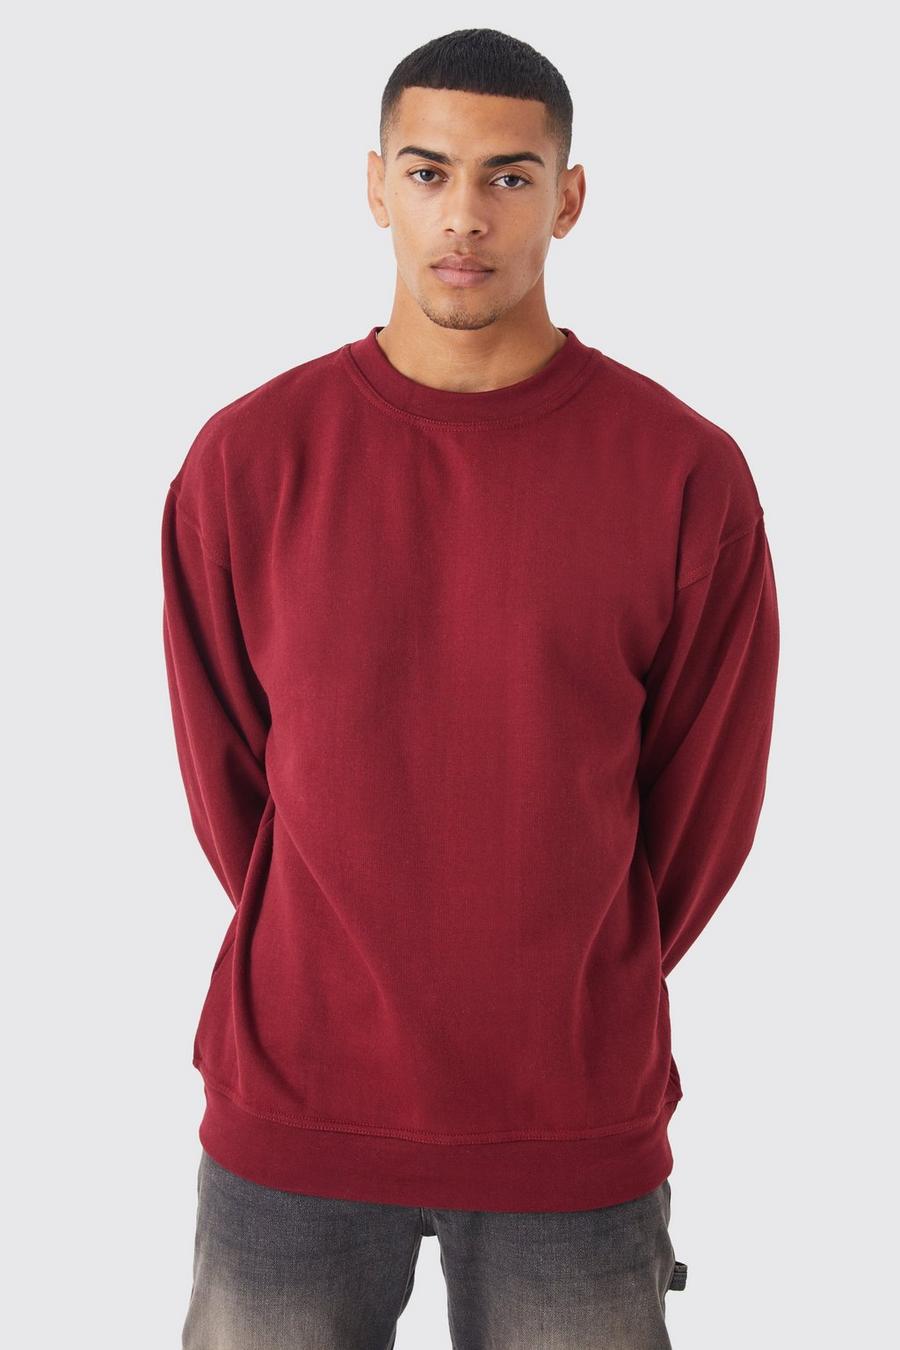 Burgundy red Oversized Basic Sweatshirt